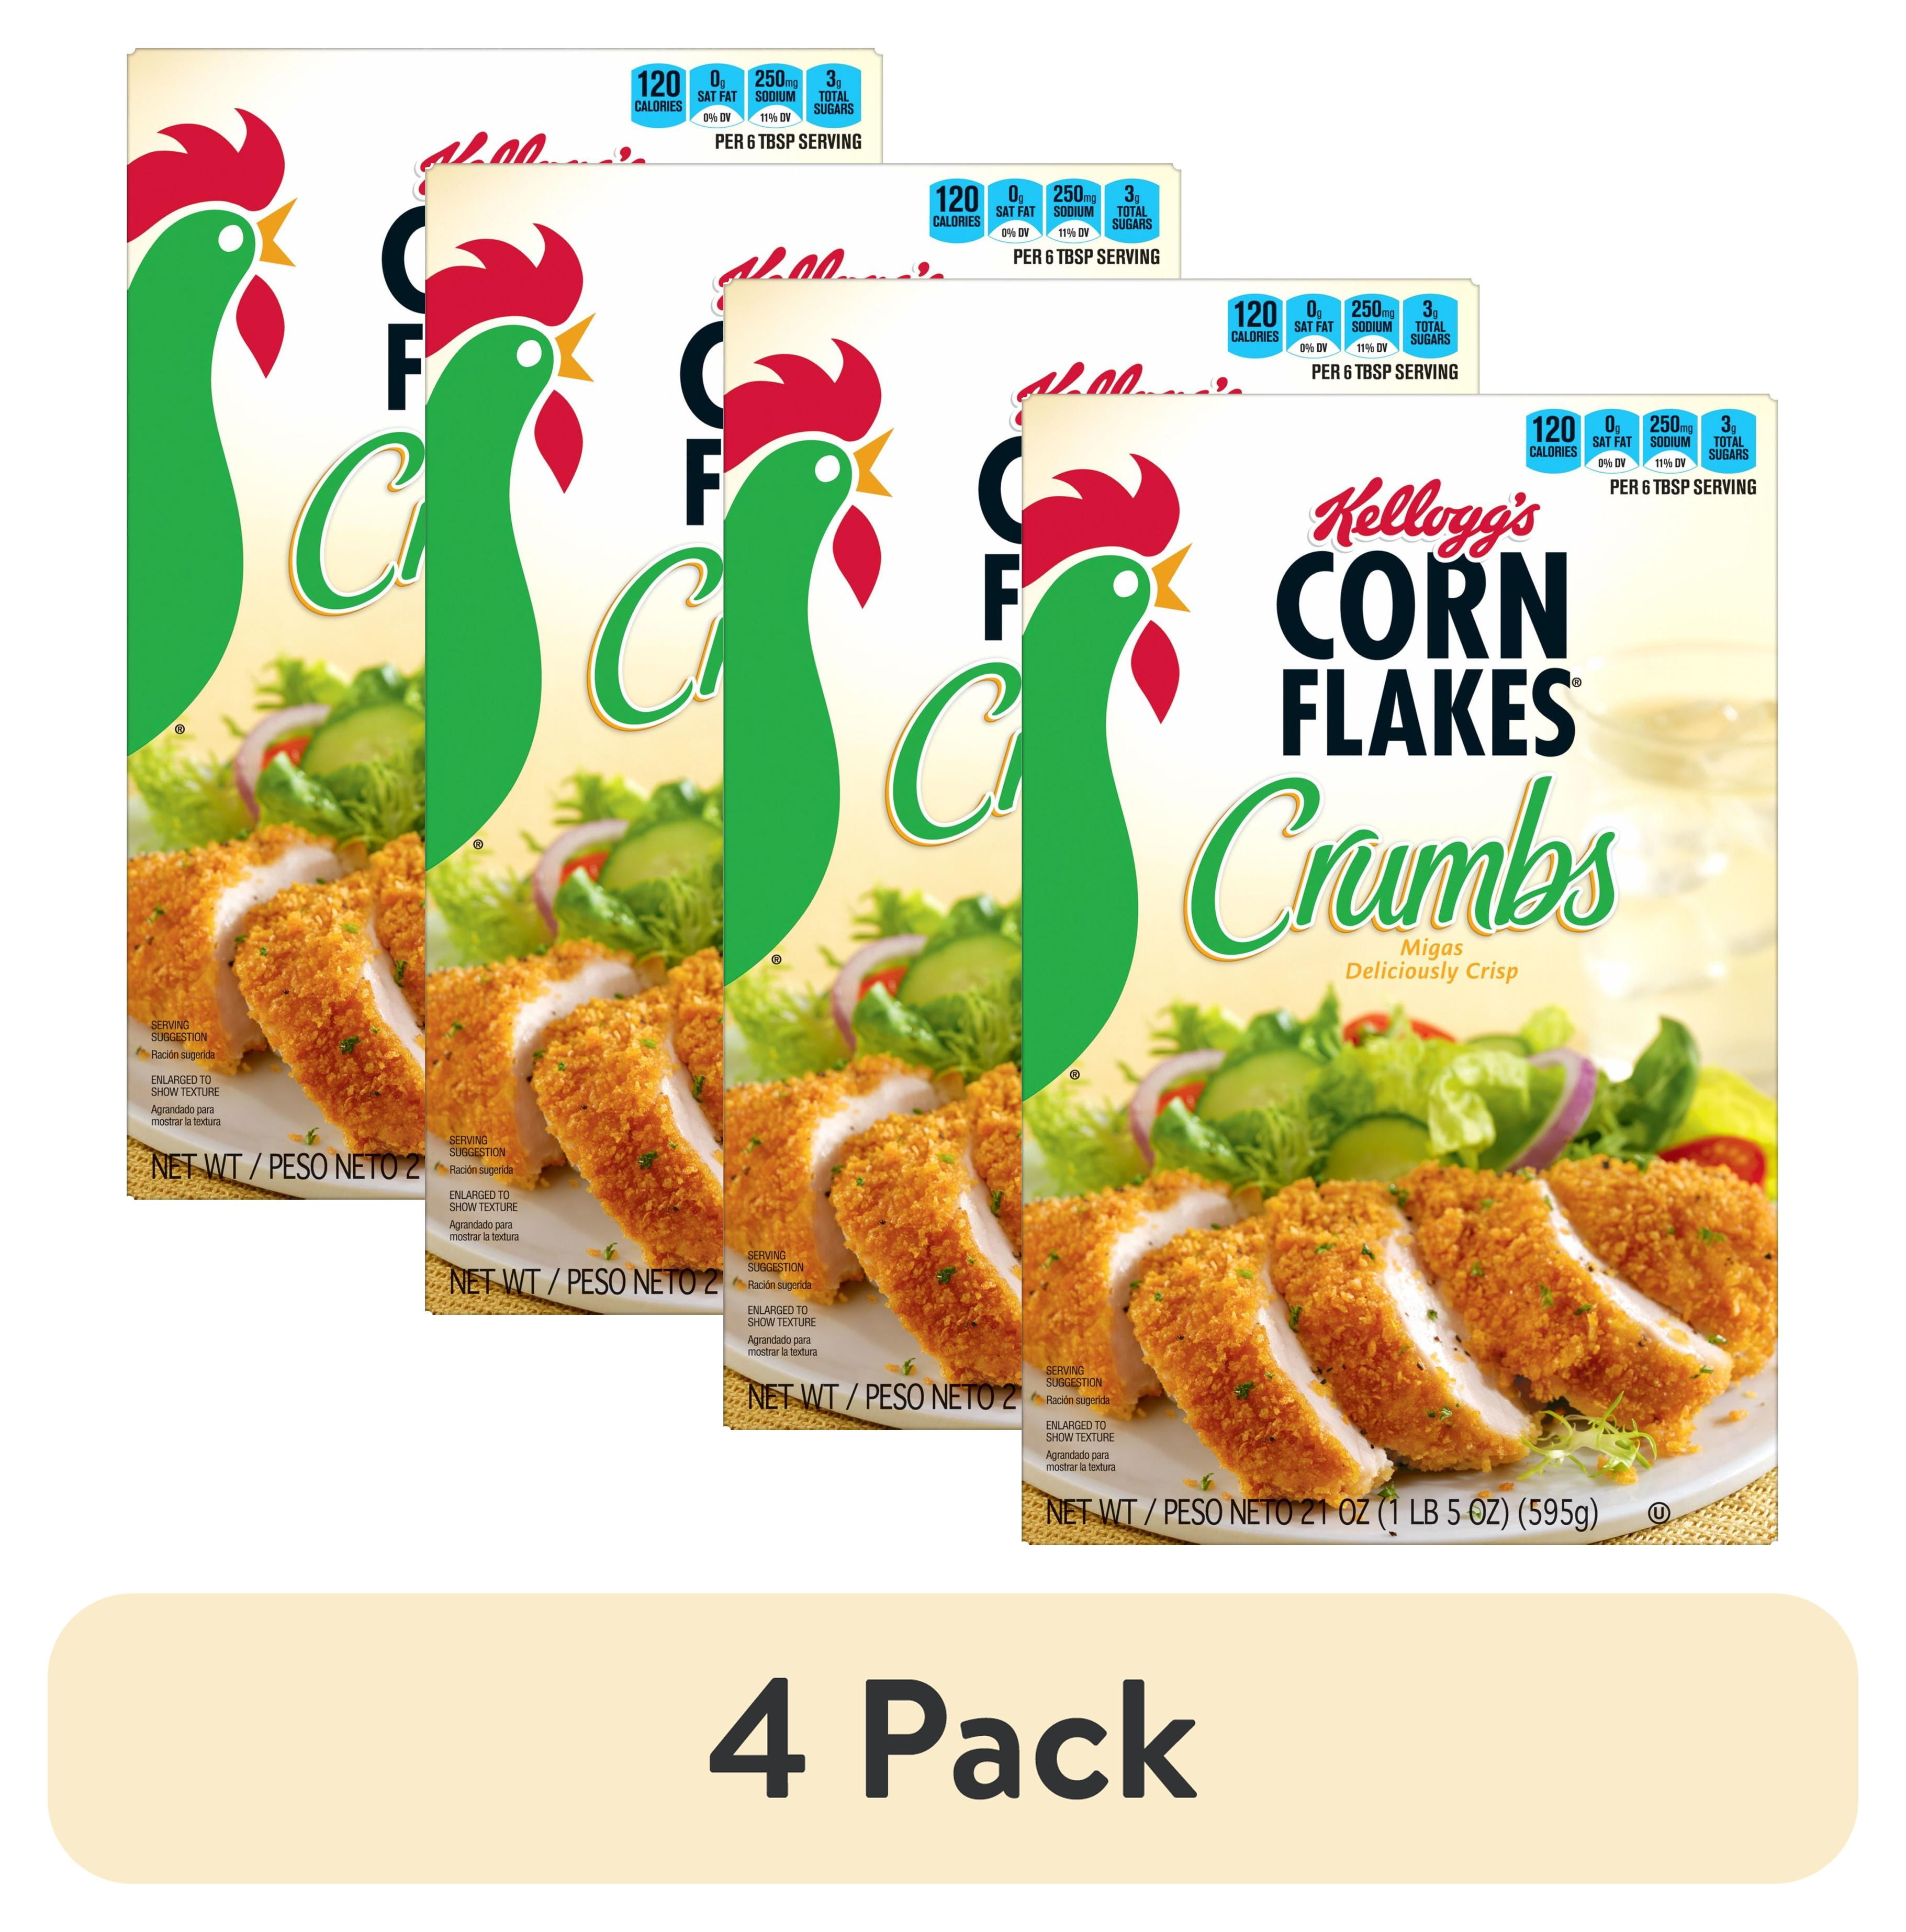 Kellogg's Corn Flakes Original Crumbs, 21 oz